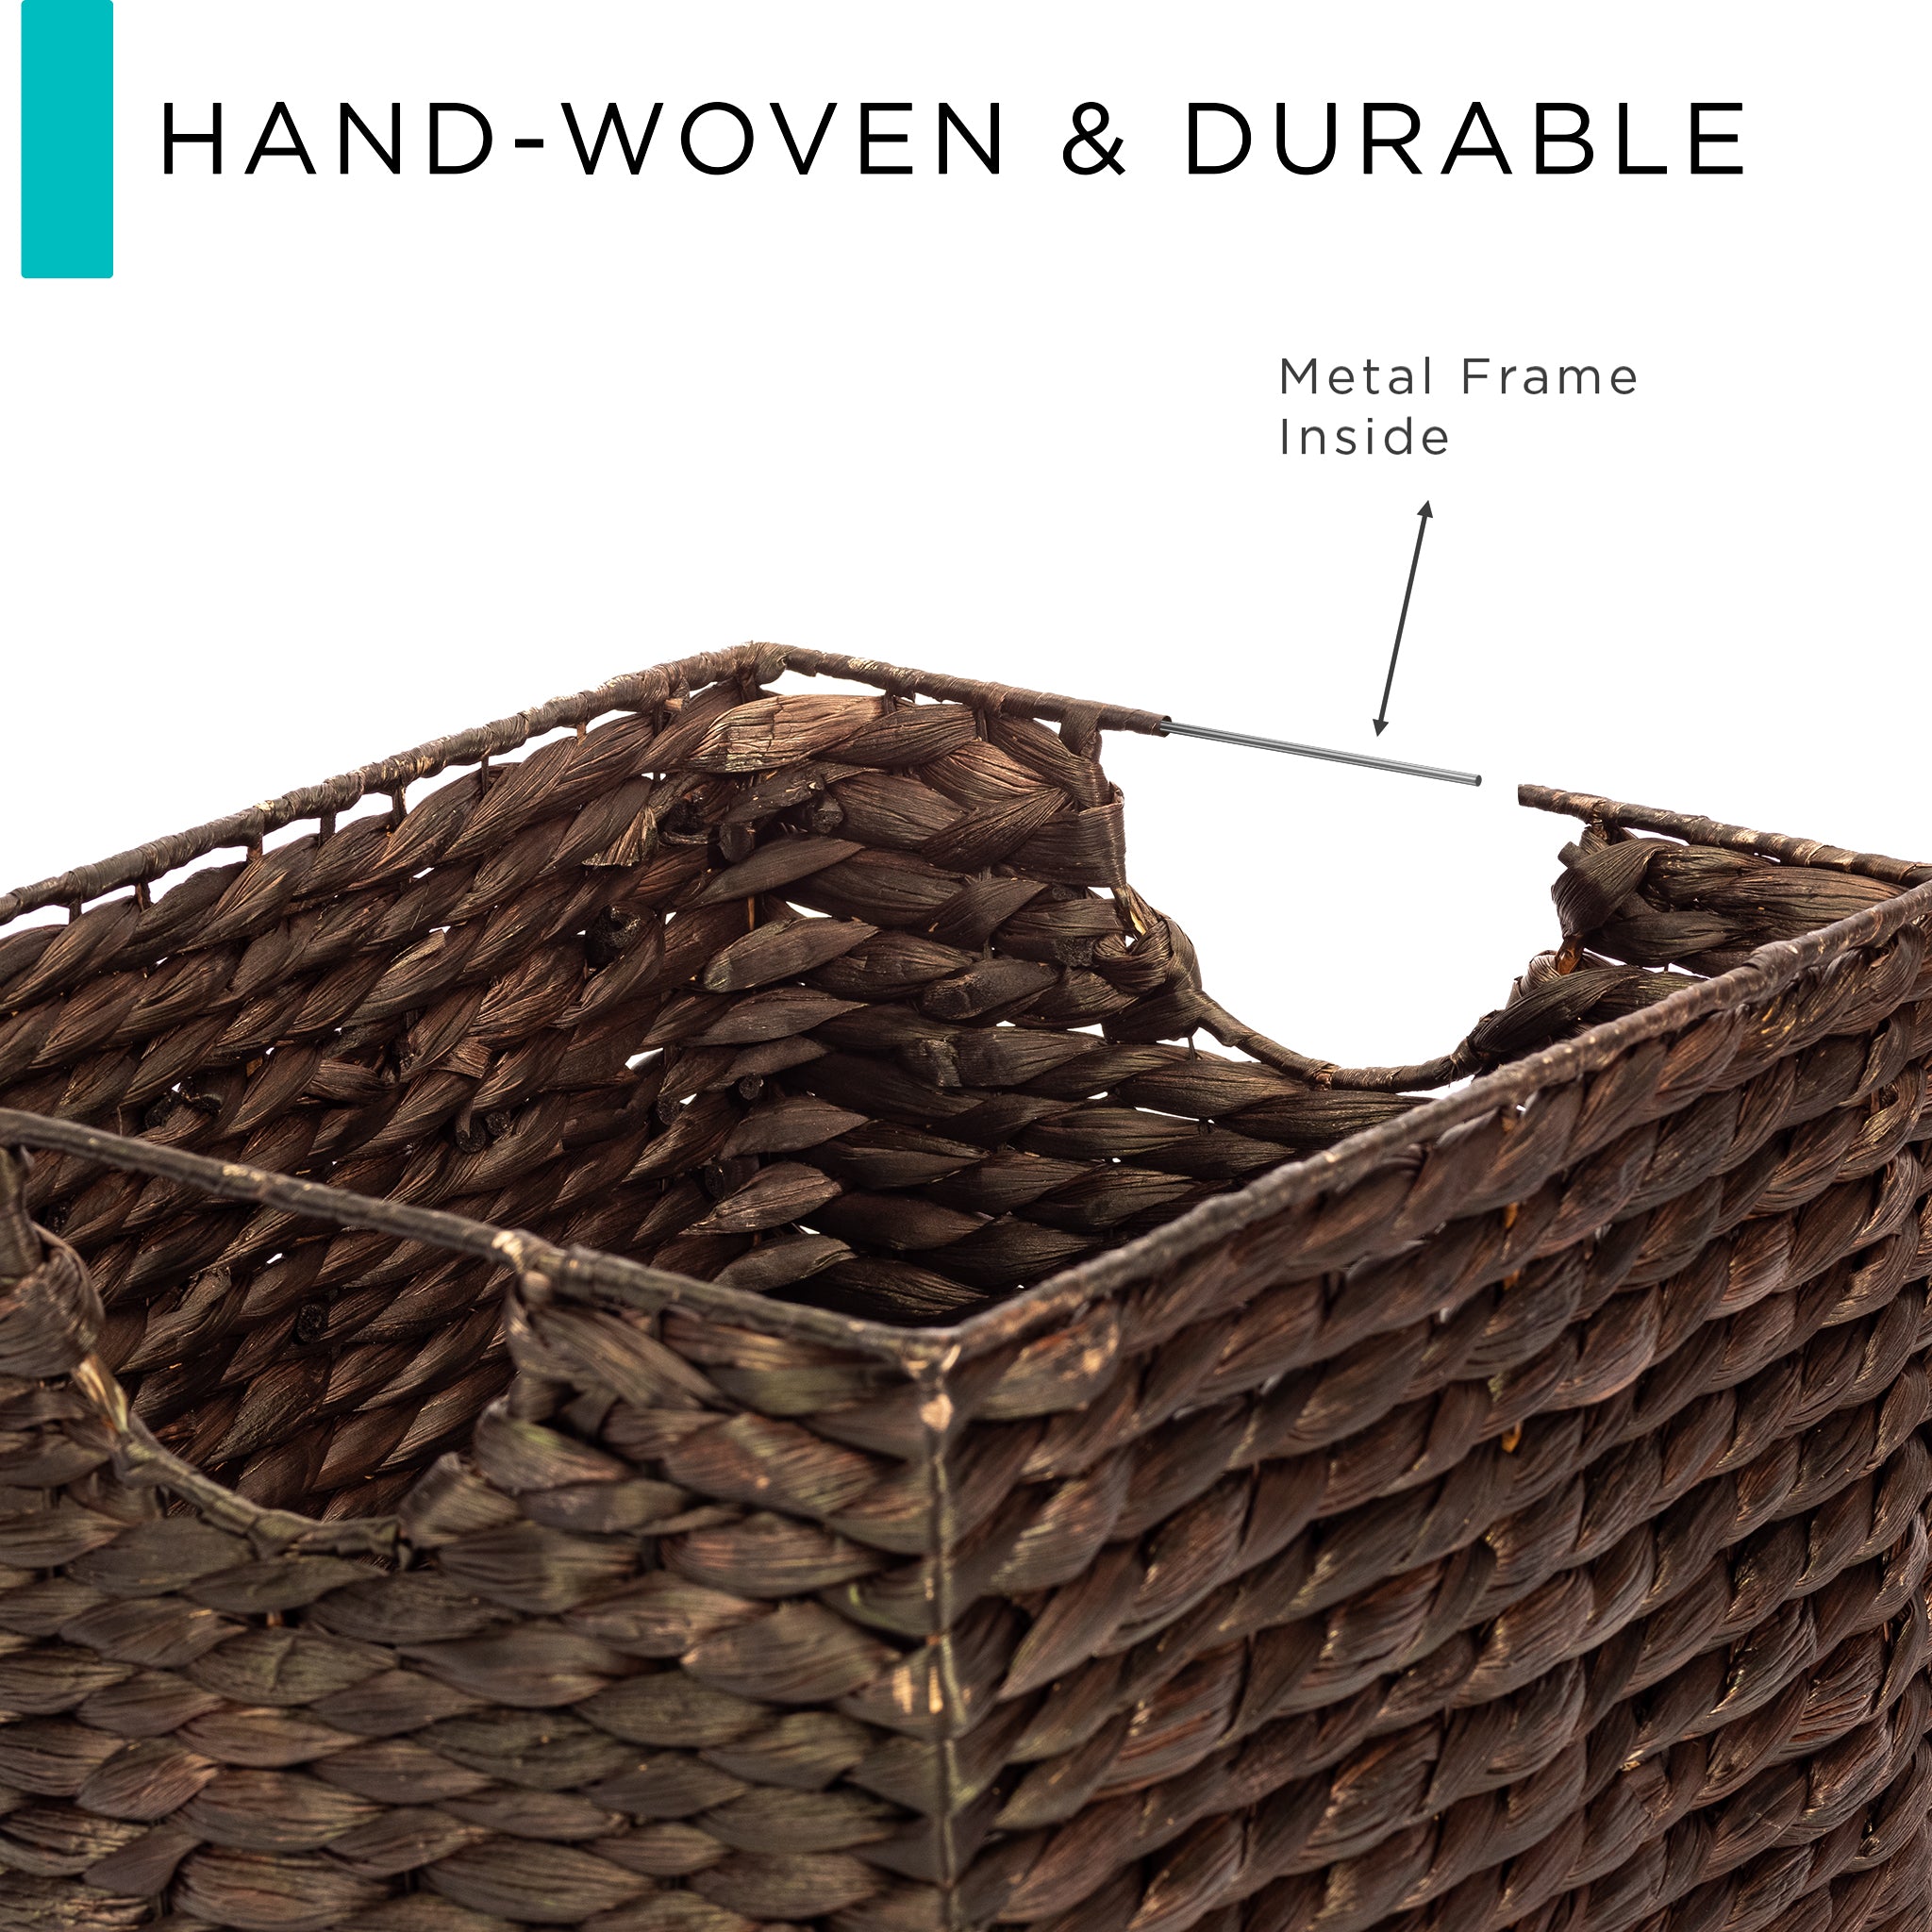 Set of 3 Storage Baskets Seagrass Shelf Small Basket Countertop Storage  Basket Handwoven Natural Basket Wicker Basket 